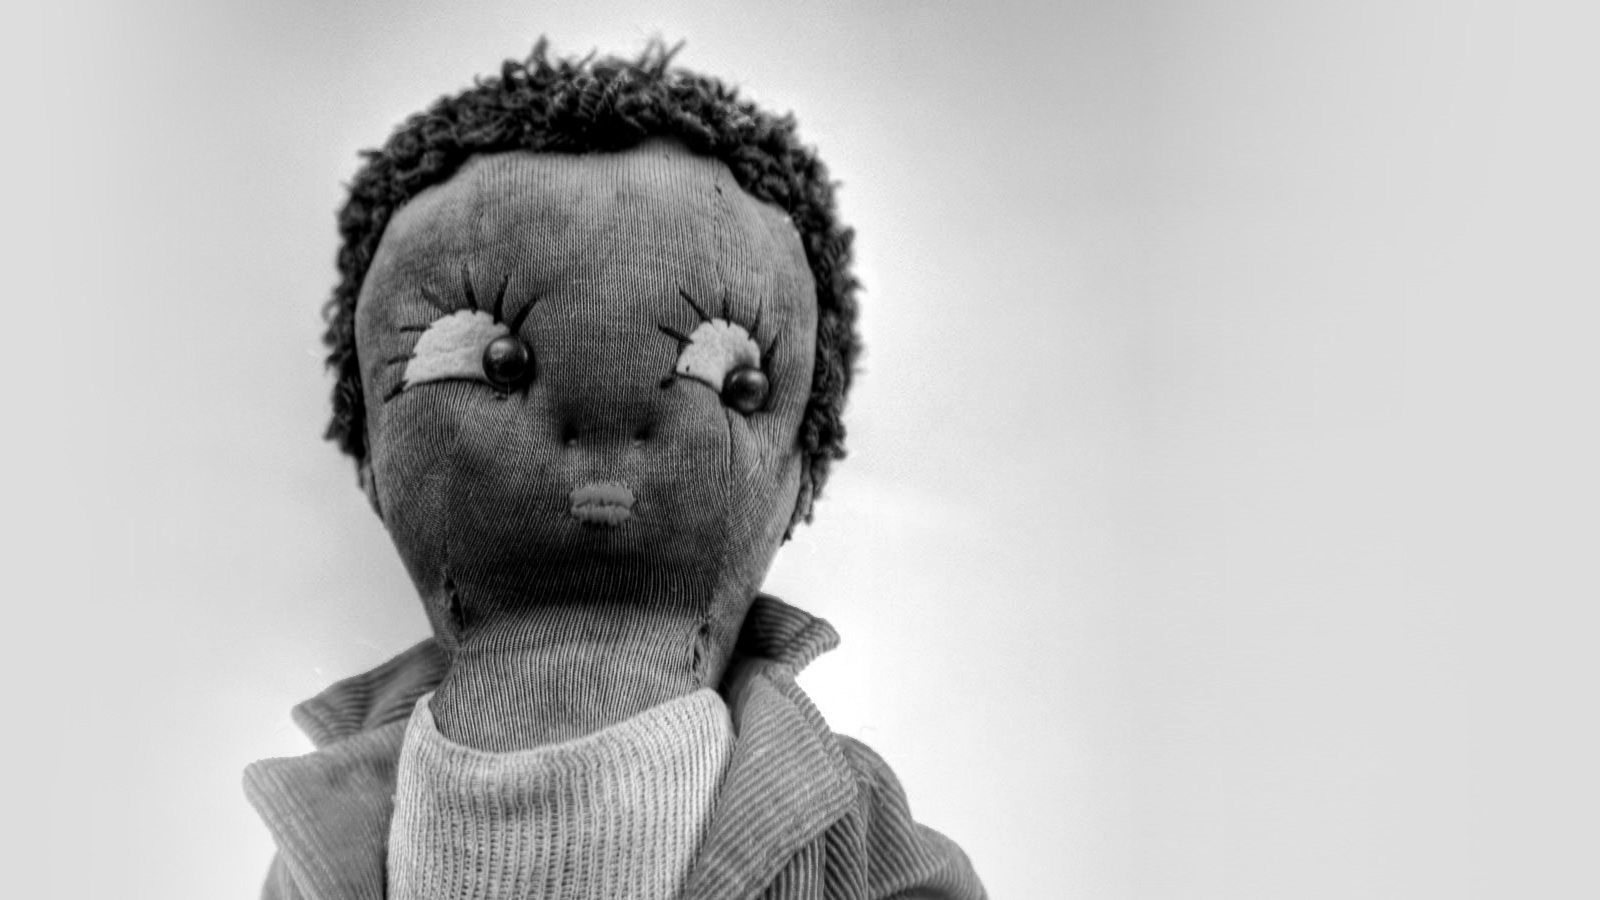 A stuffed doll of a black woman